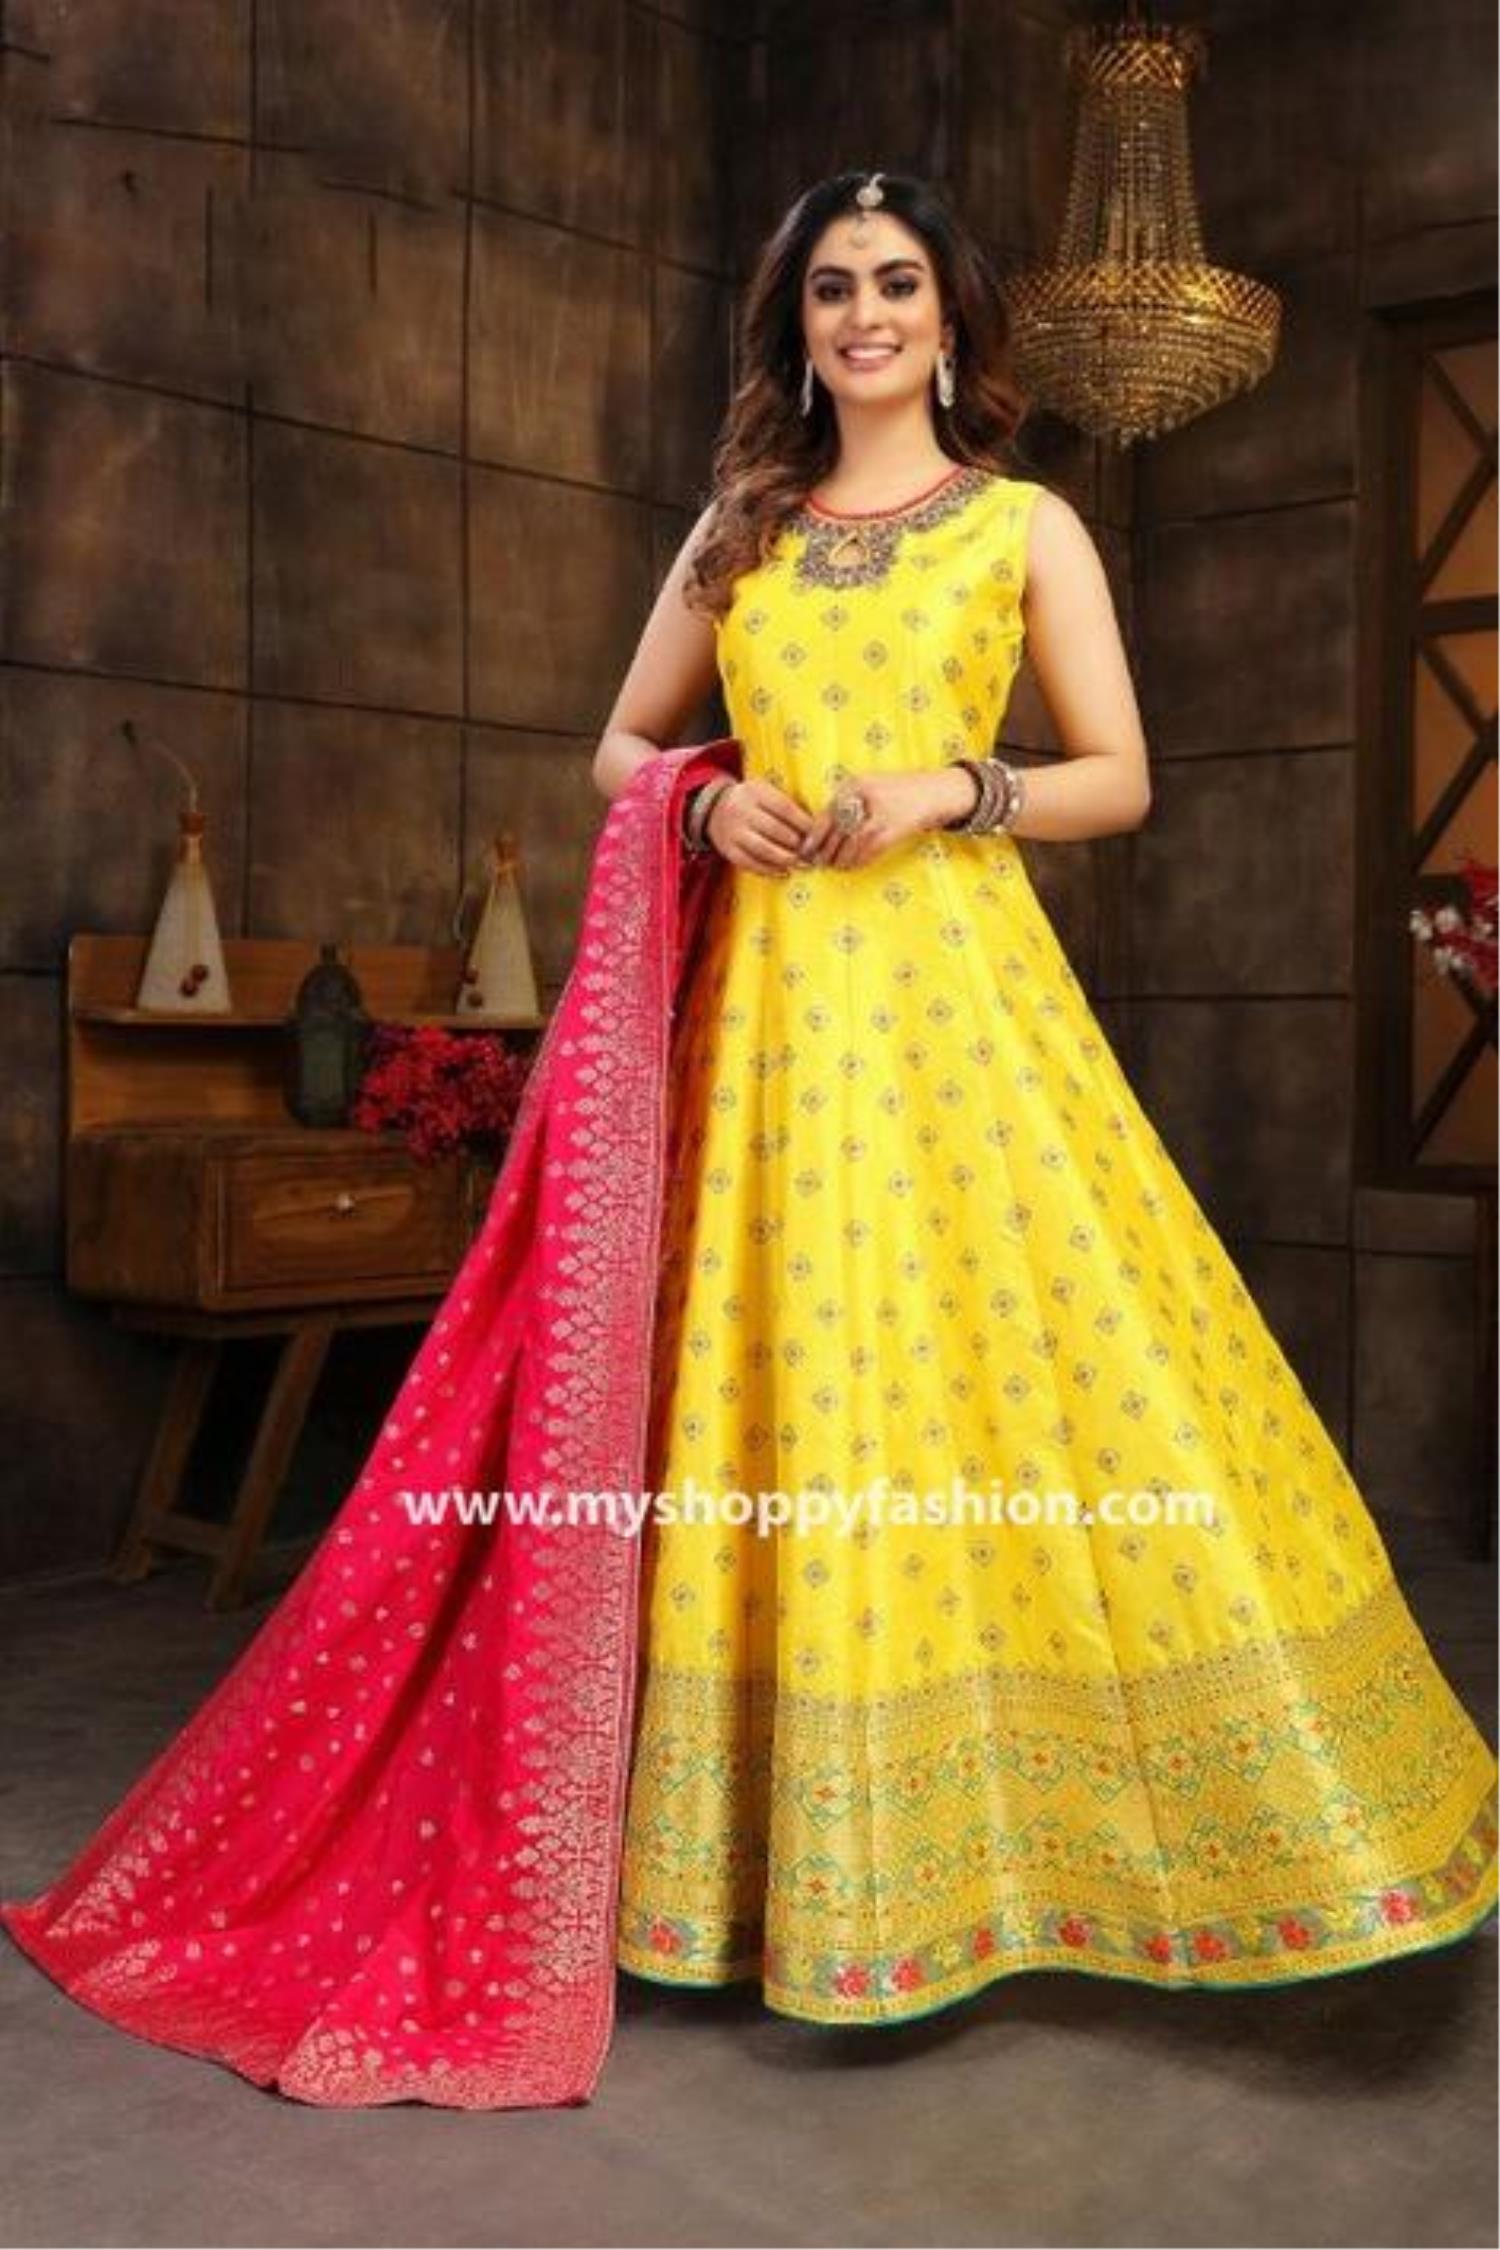 yellow dress with pink dupatta Big sale ...